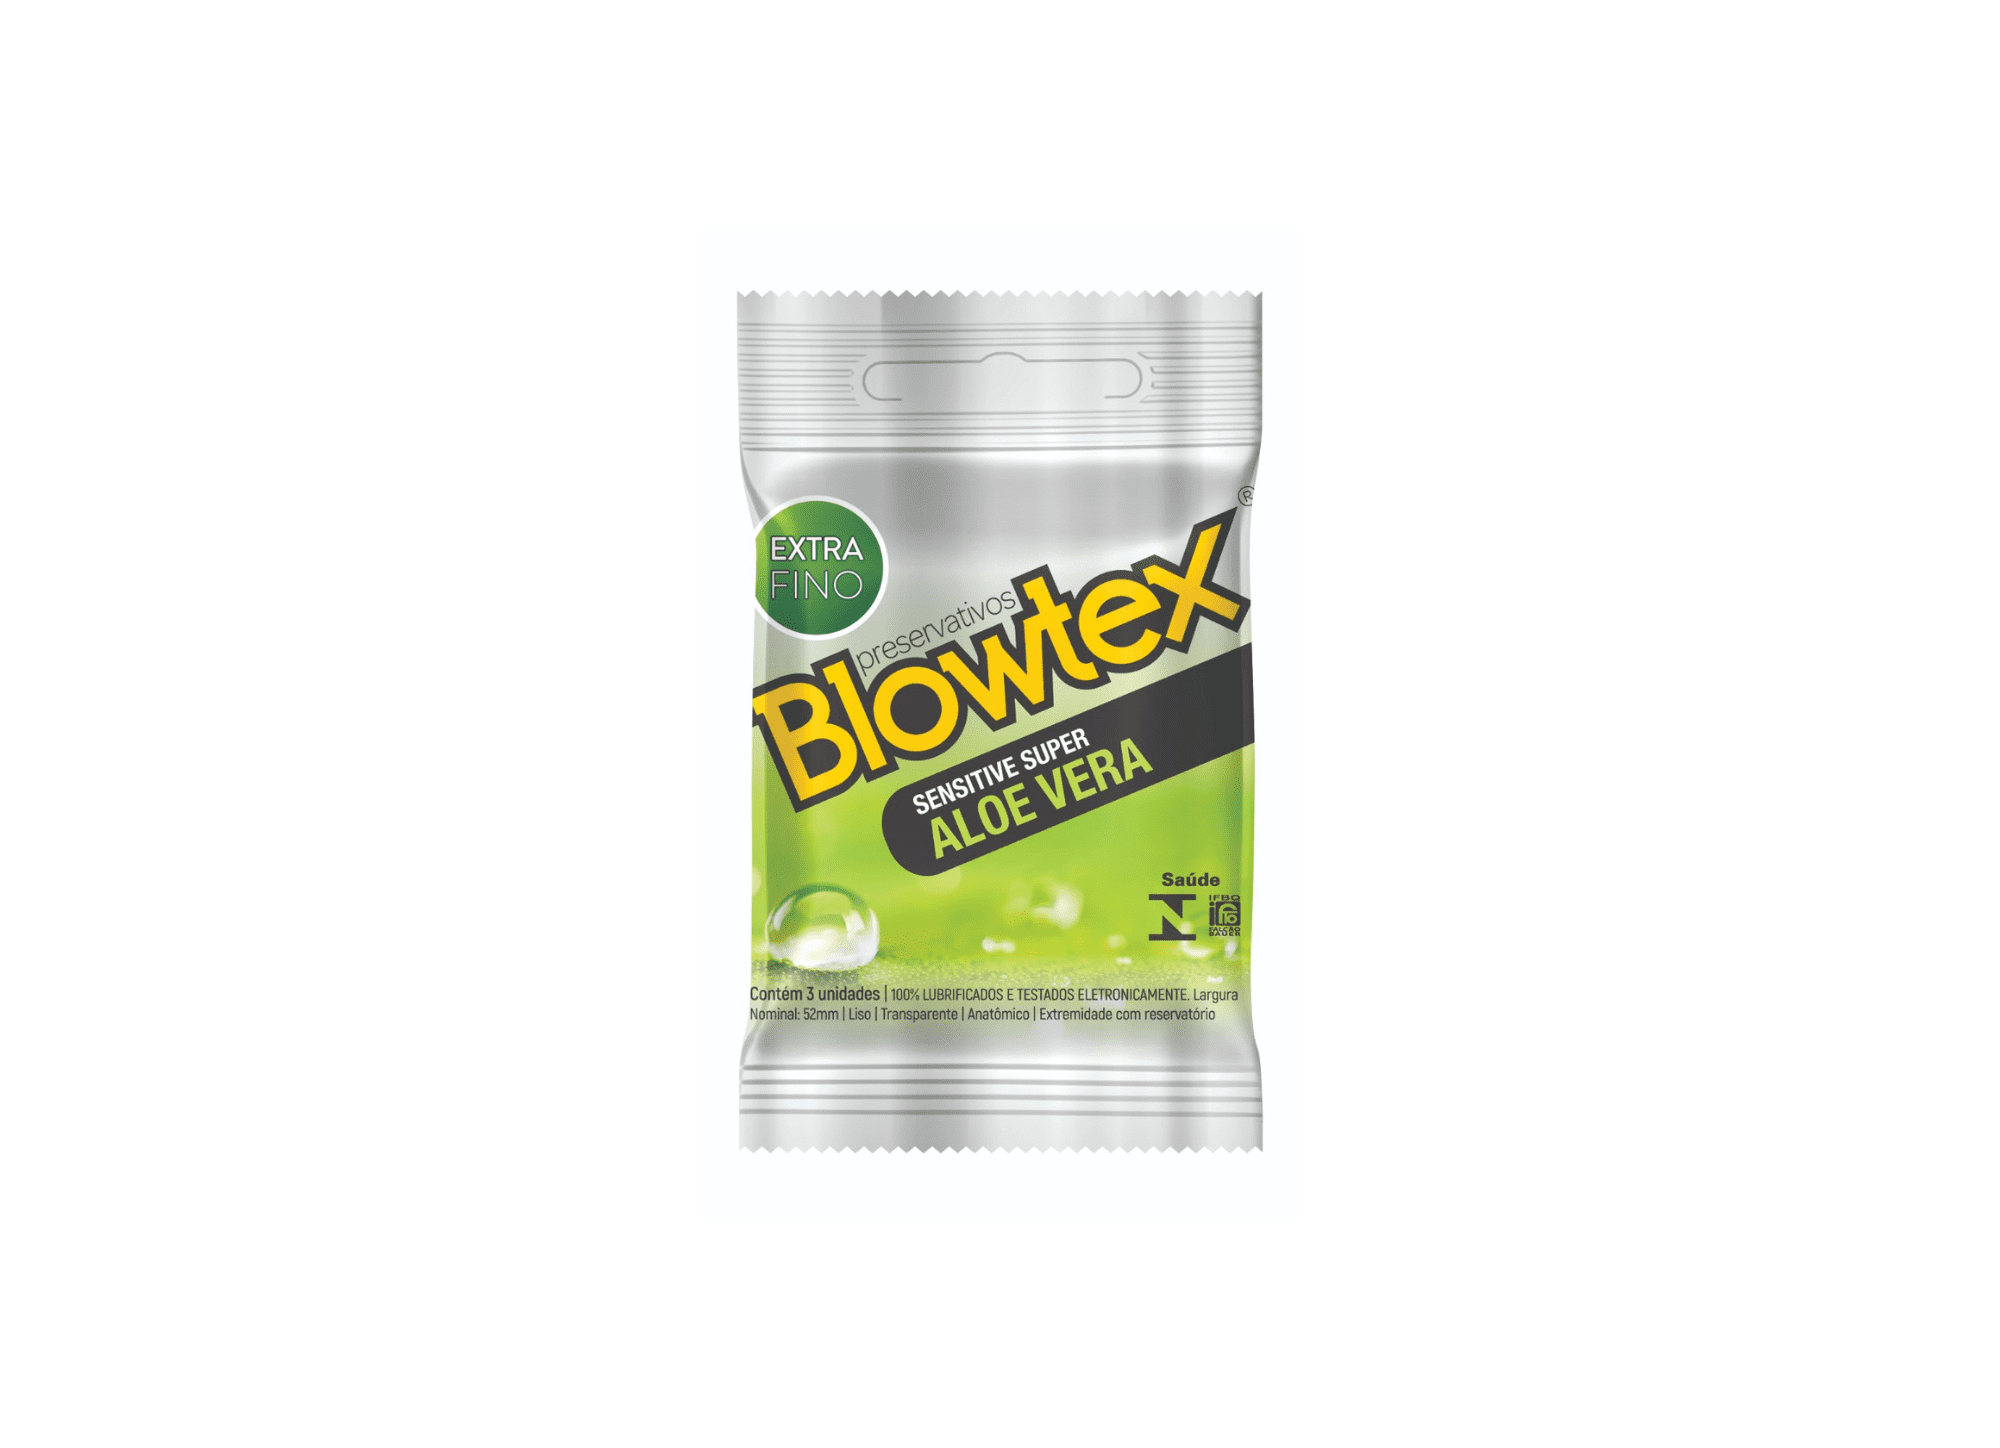 Featured image for “Blowtex lança preservativo sensitive super”